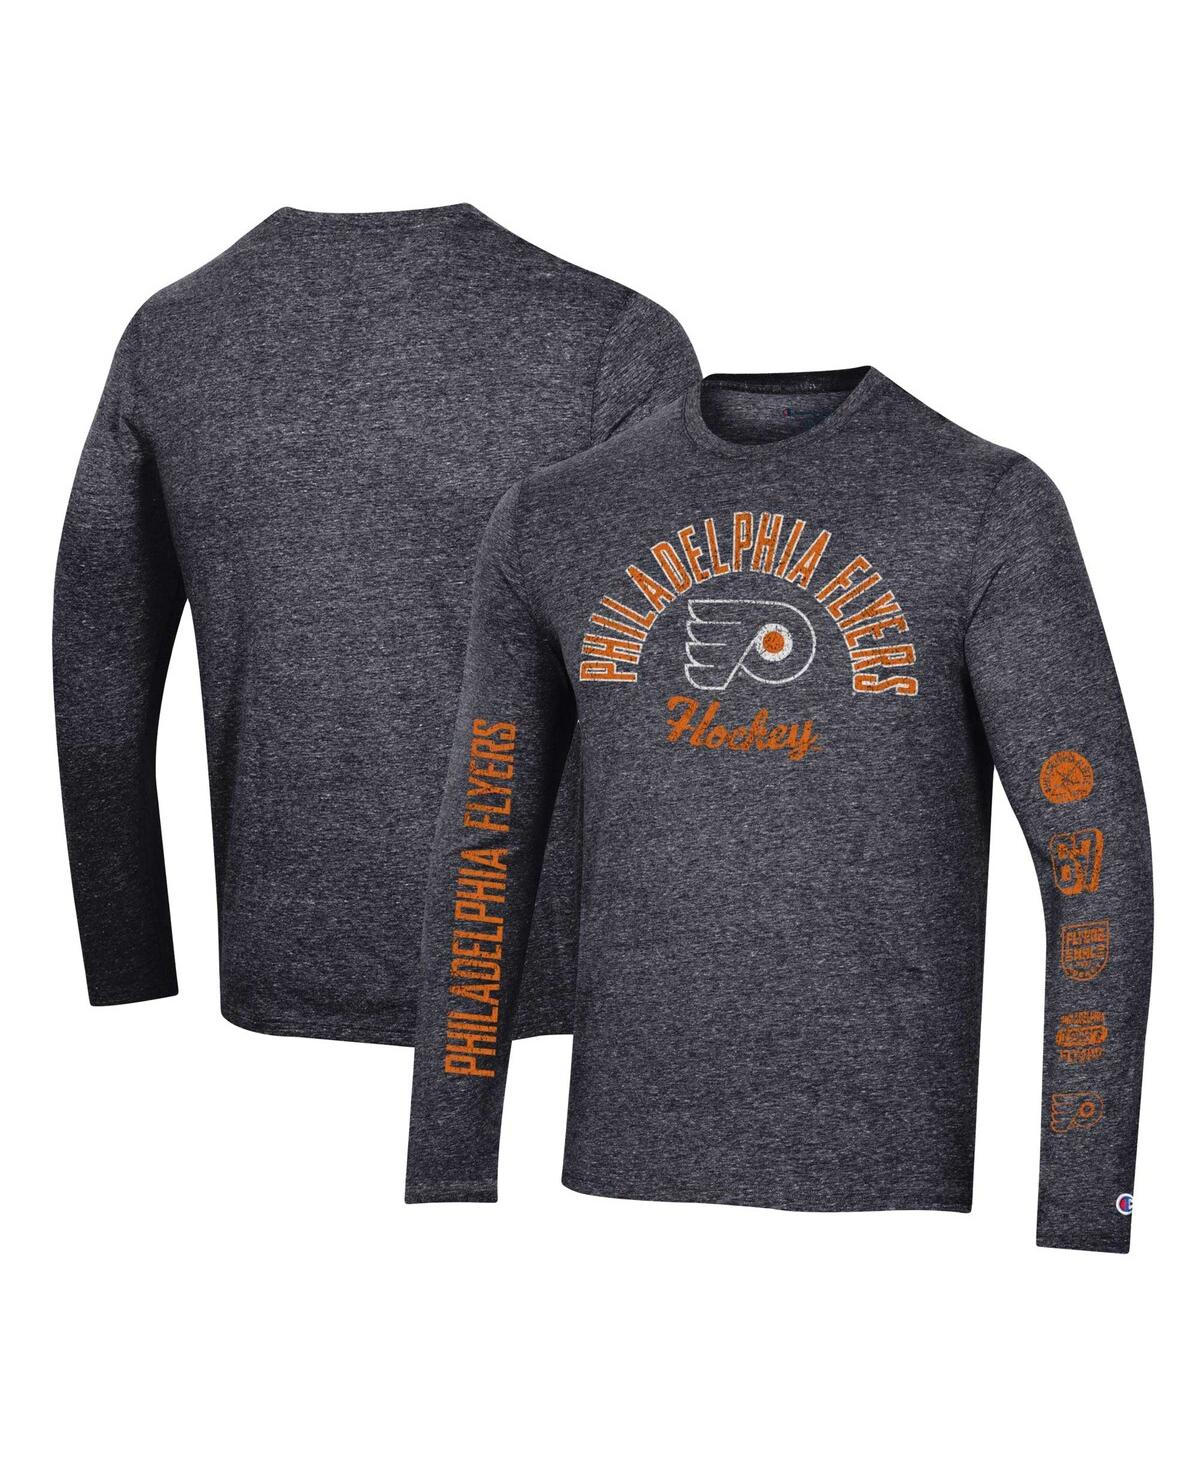 Shop Champion Men's  Heather Black Distressed Philadelphia Flyers Multi-logo Tri-blend Long Sleeve T-shirt